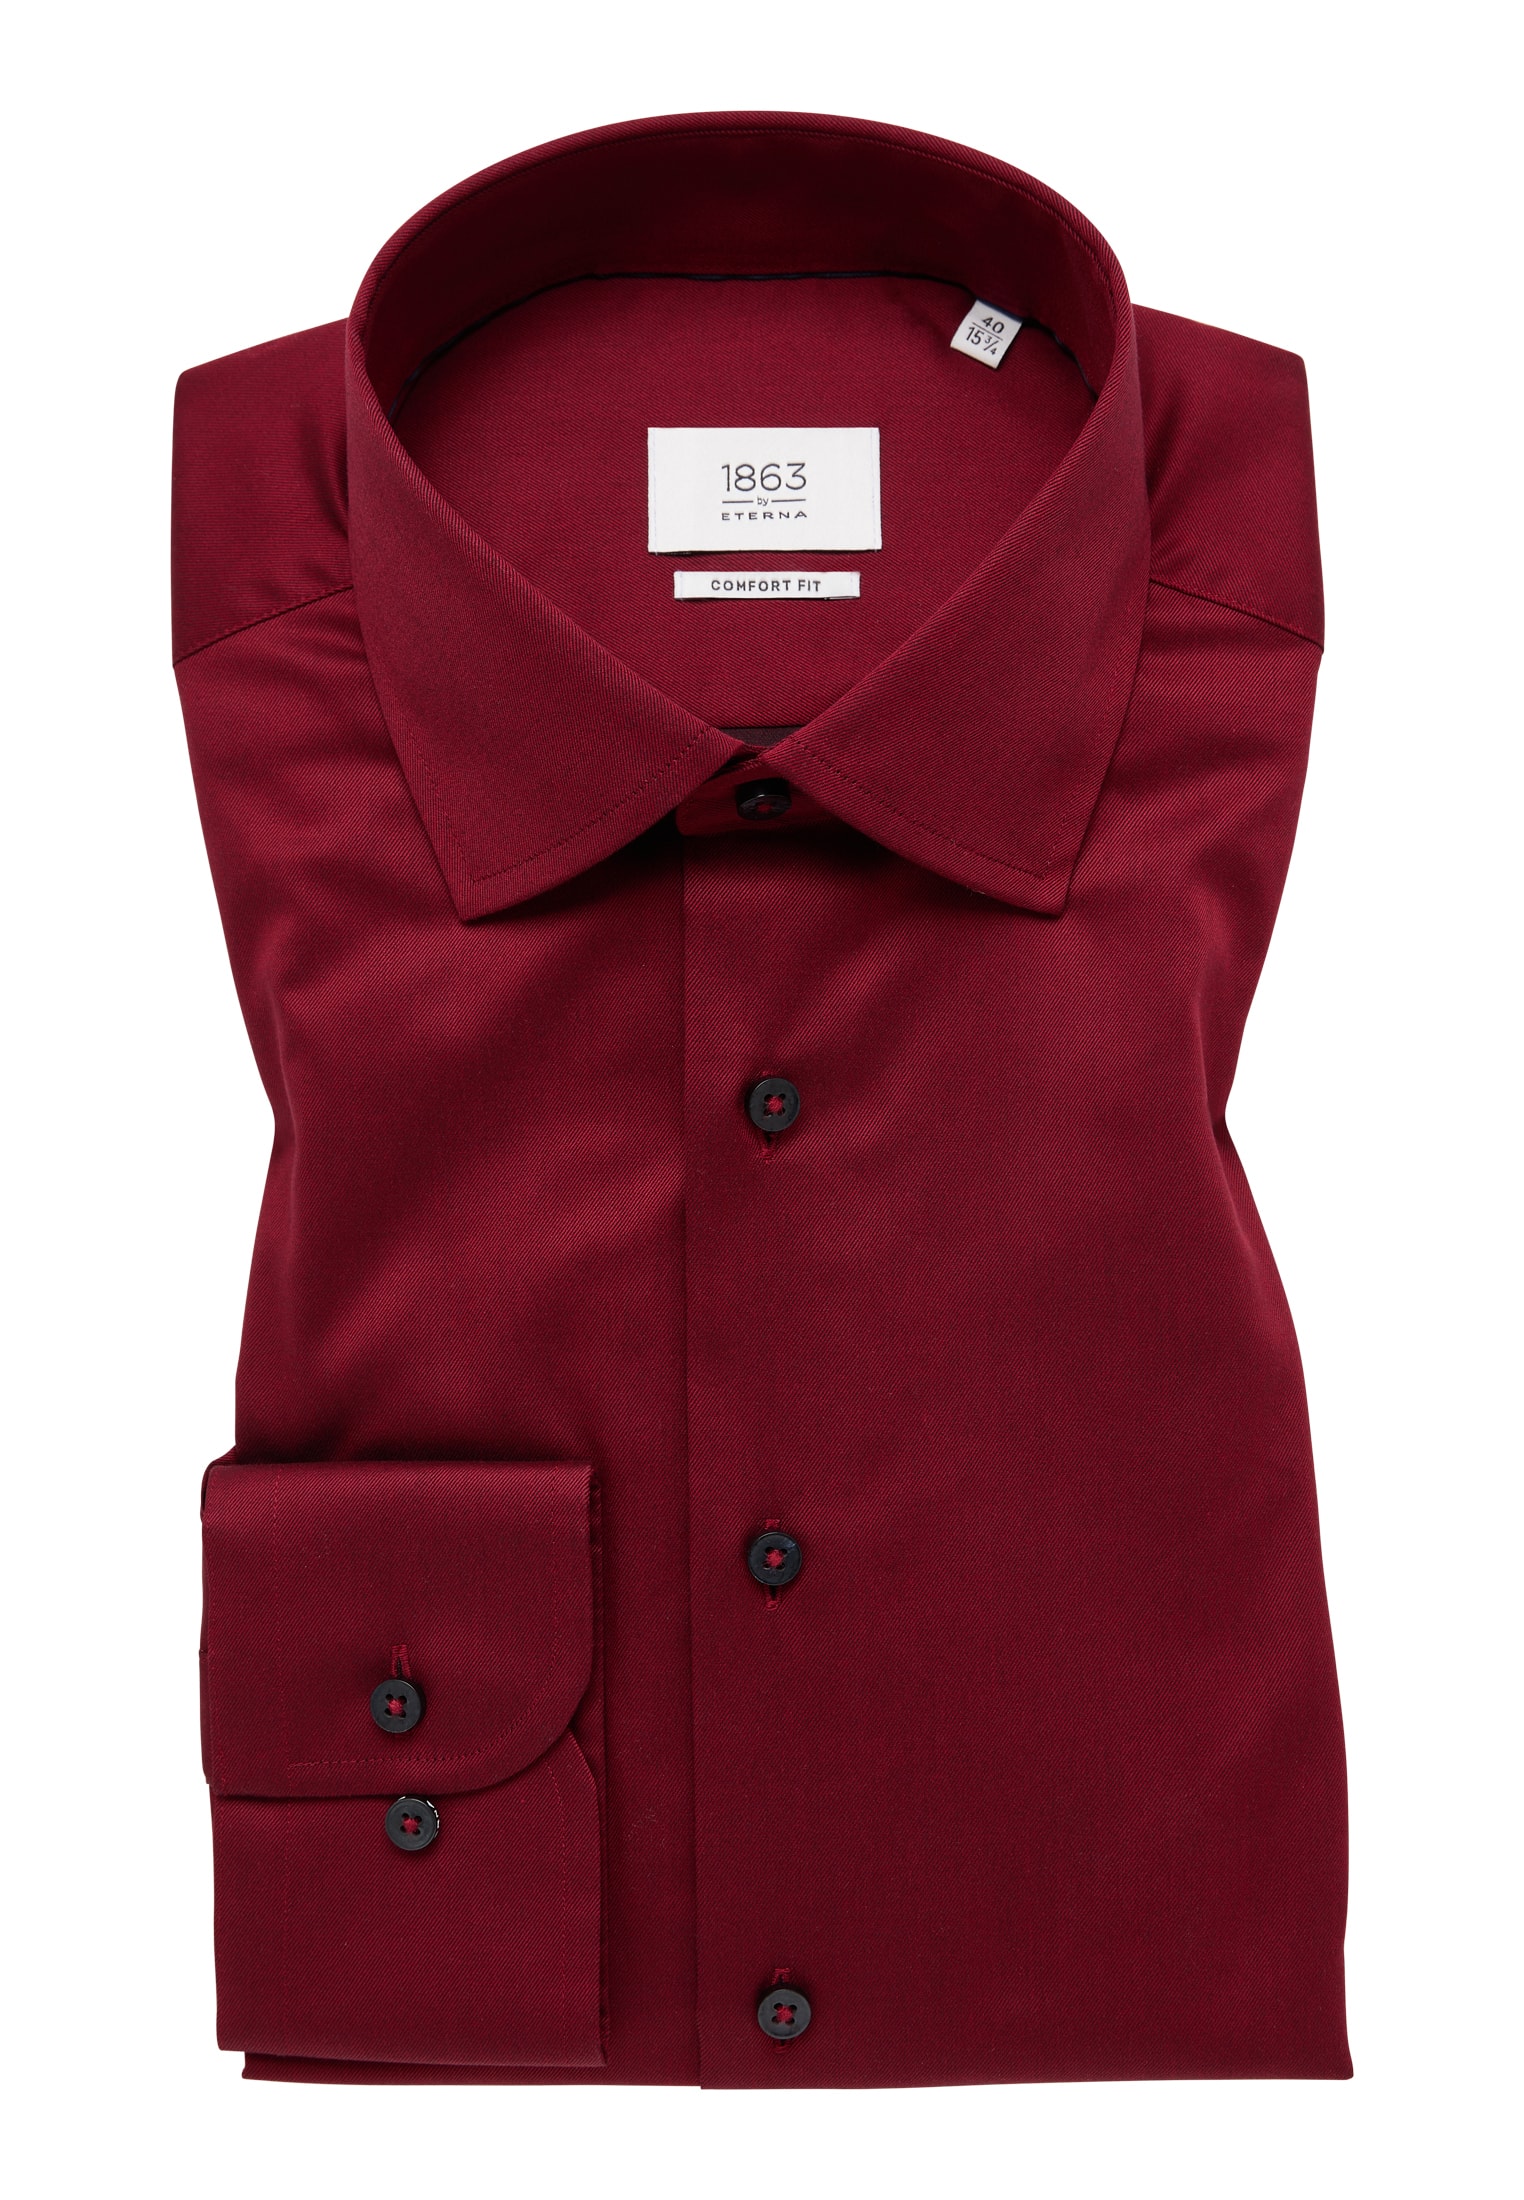 COMFORT FIT Luxury Shirt in rubinrot unifarben | rubinrot | Langarm | 43 |  1SH00739-05-51-43-1/1